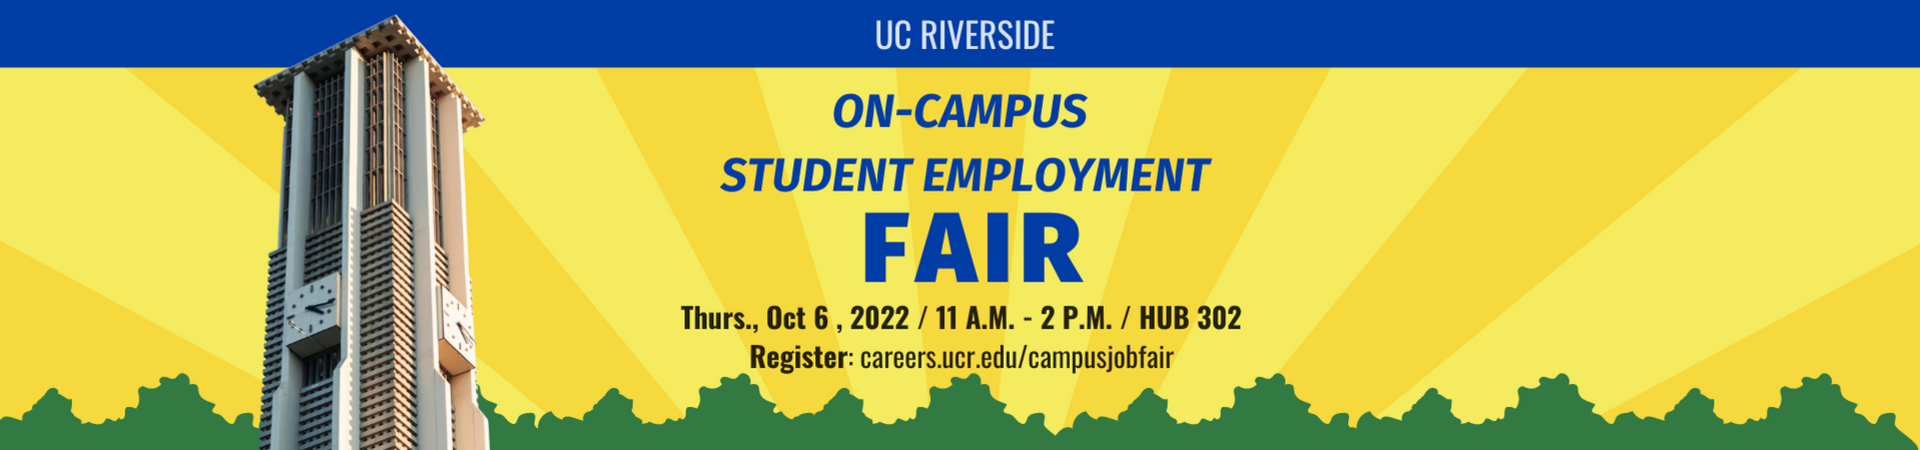 On-campus Student Employment Fair (1)